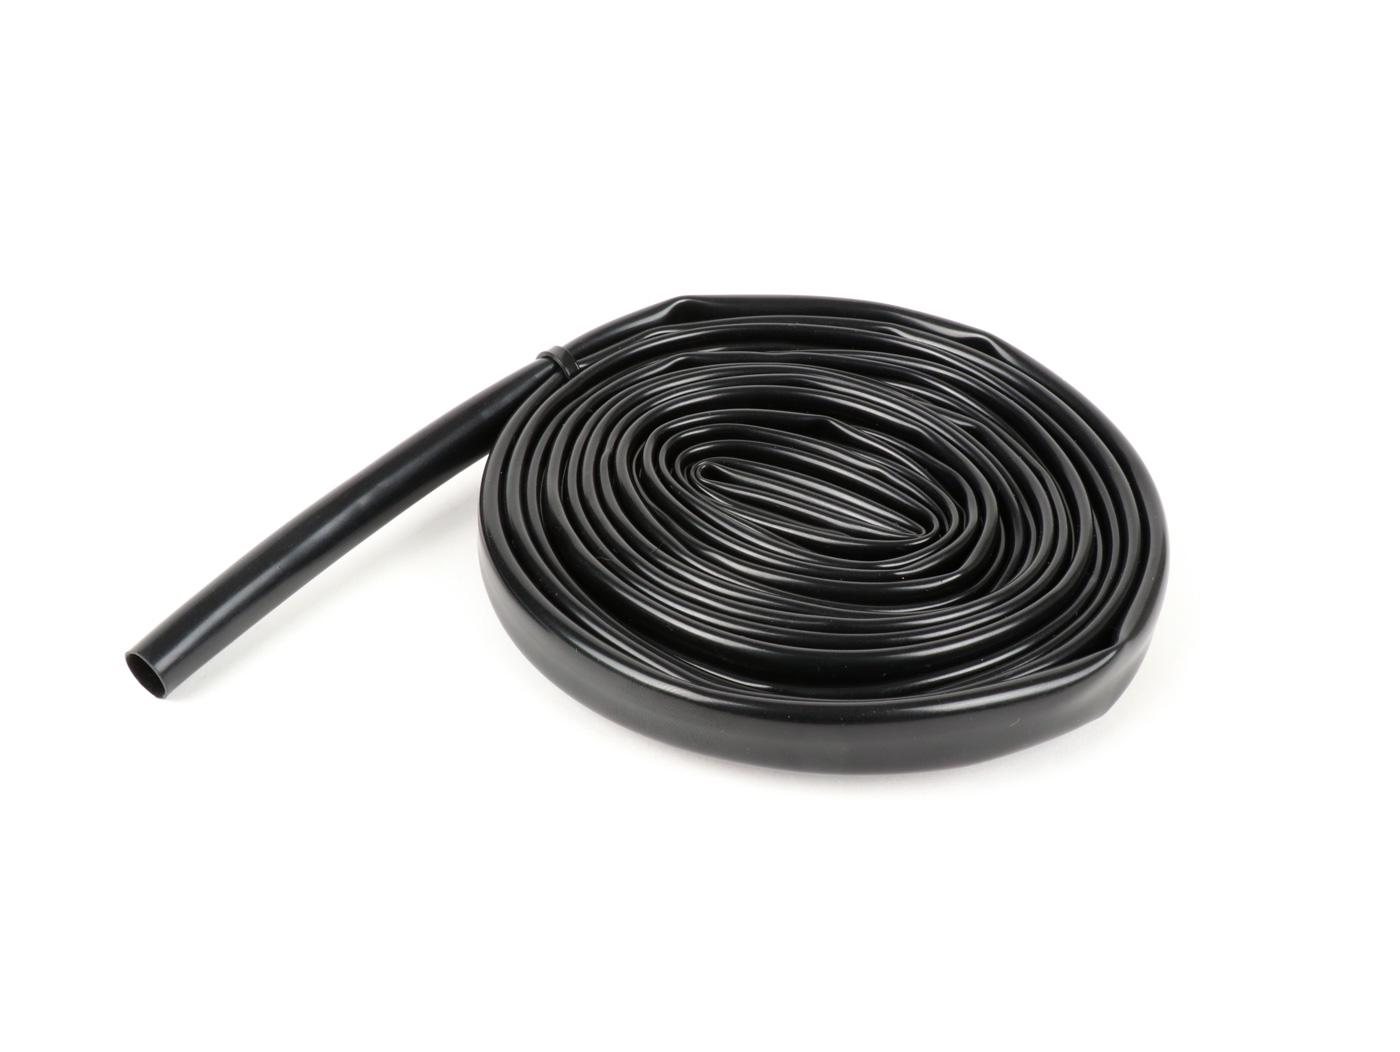 Vaina de cableado -UNIVERSAL Ø = 10mm- 5m - negro